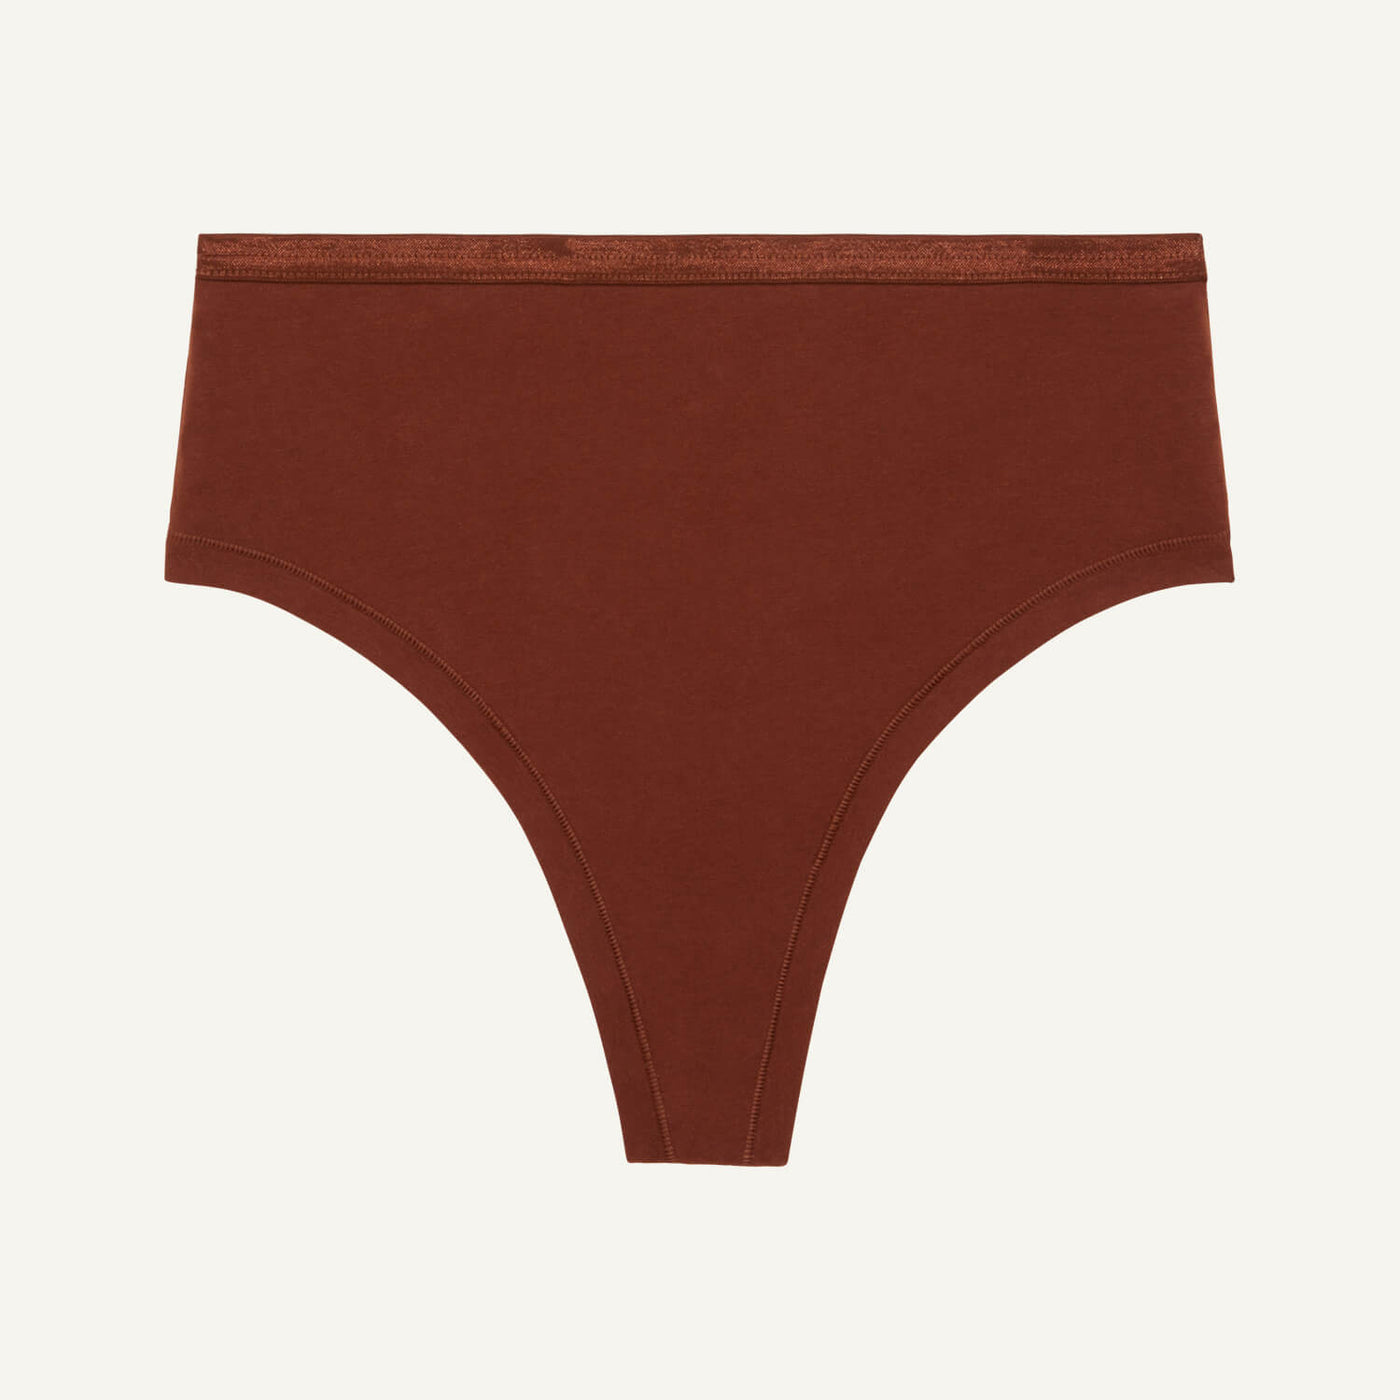 Women's Basic Underwear Thong, Cotton Panties, Lot of 5-10, S, M, L, XL